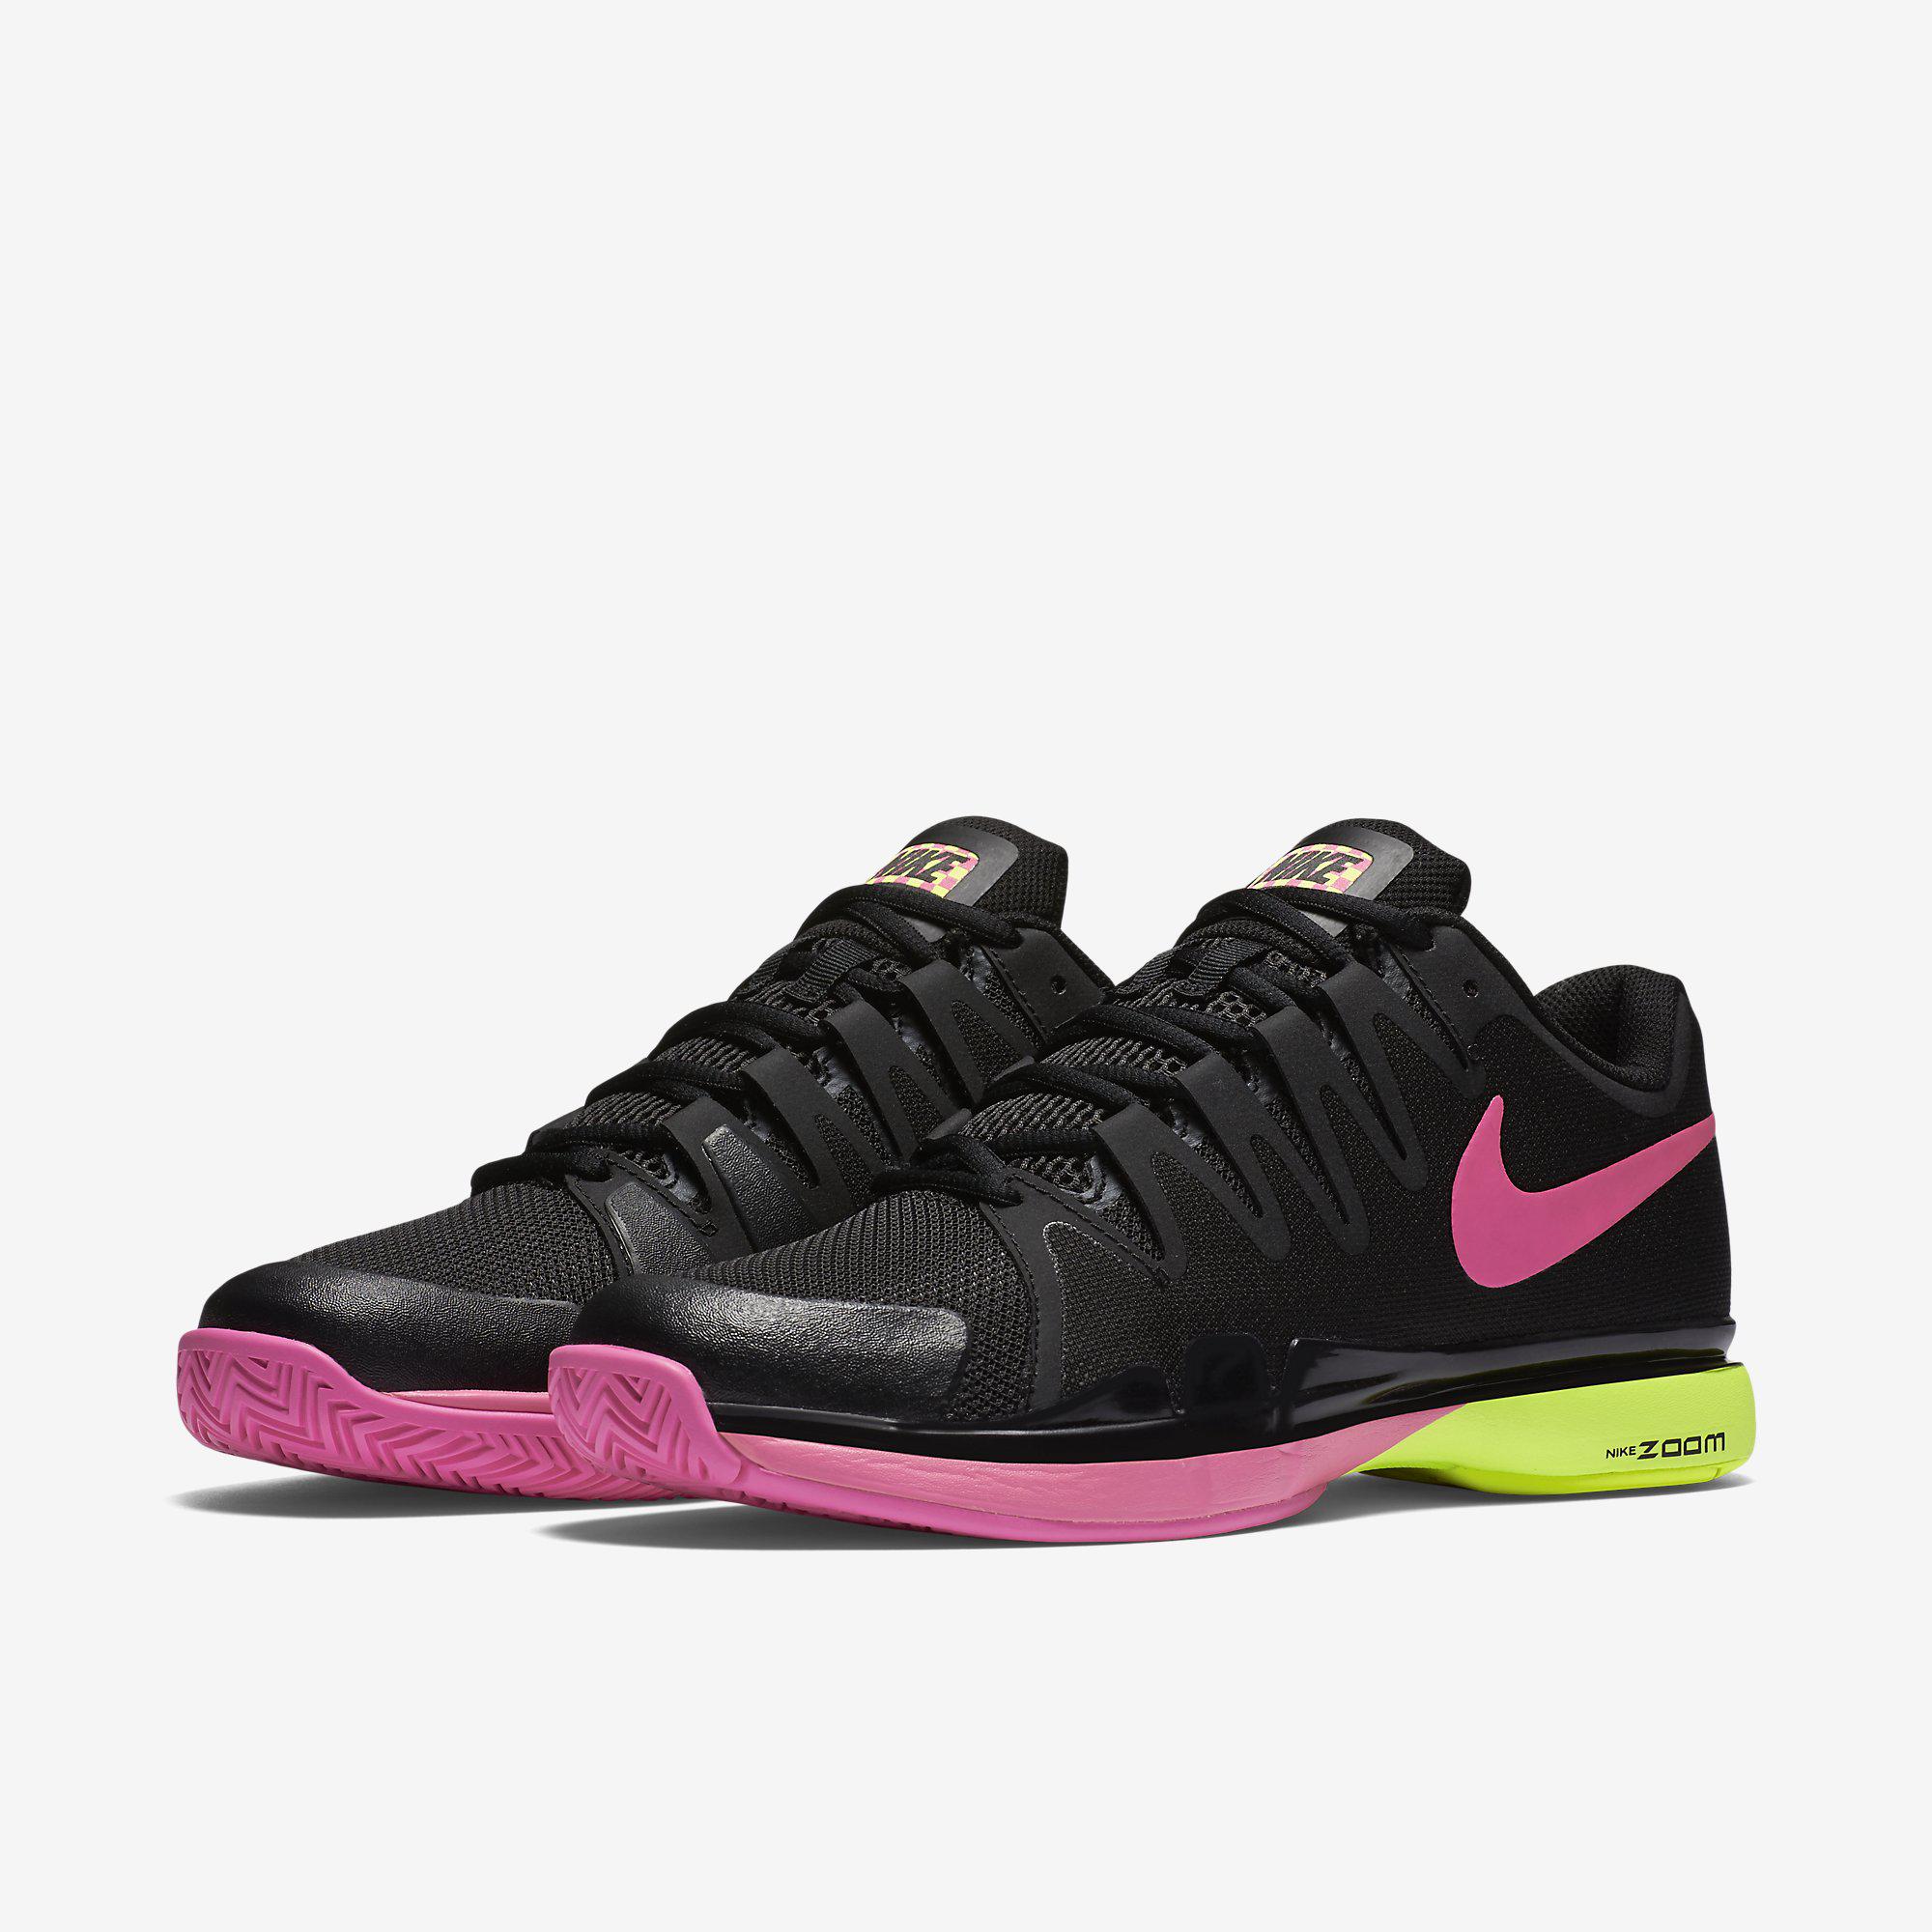 Nike Womens Zoom Vapor 9.5 Tennis Shoes - Black/Volt/Pink - 0